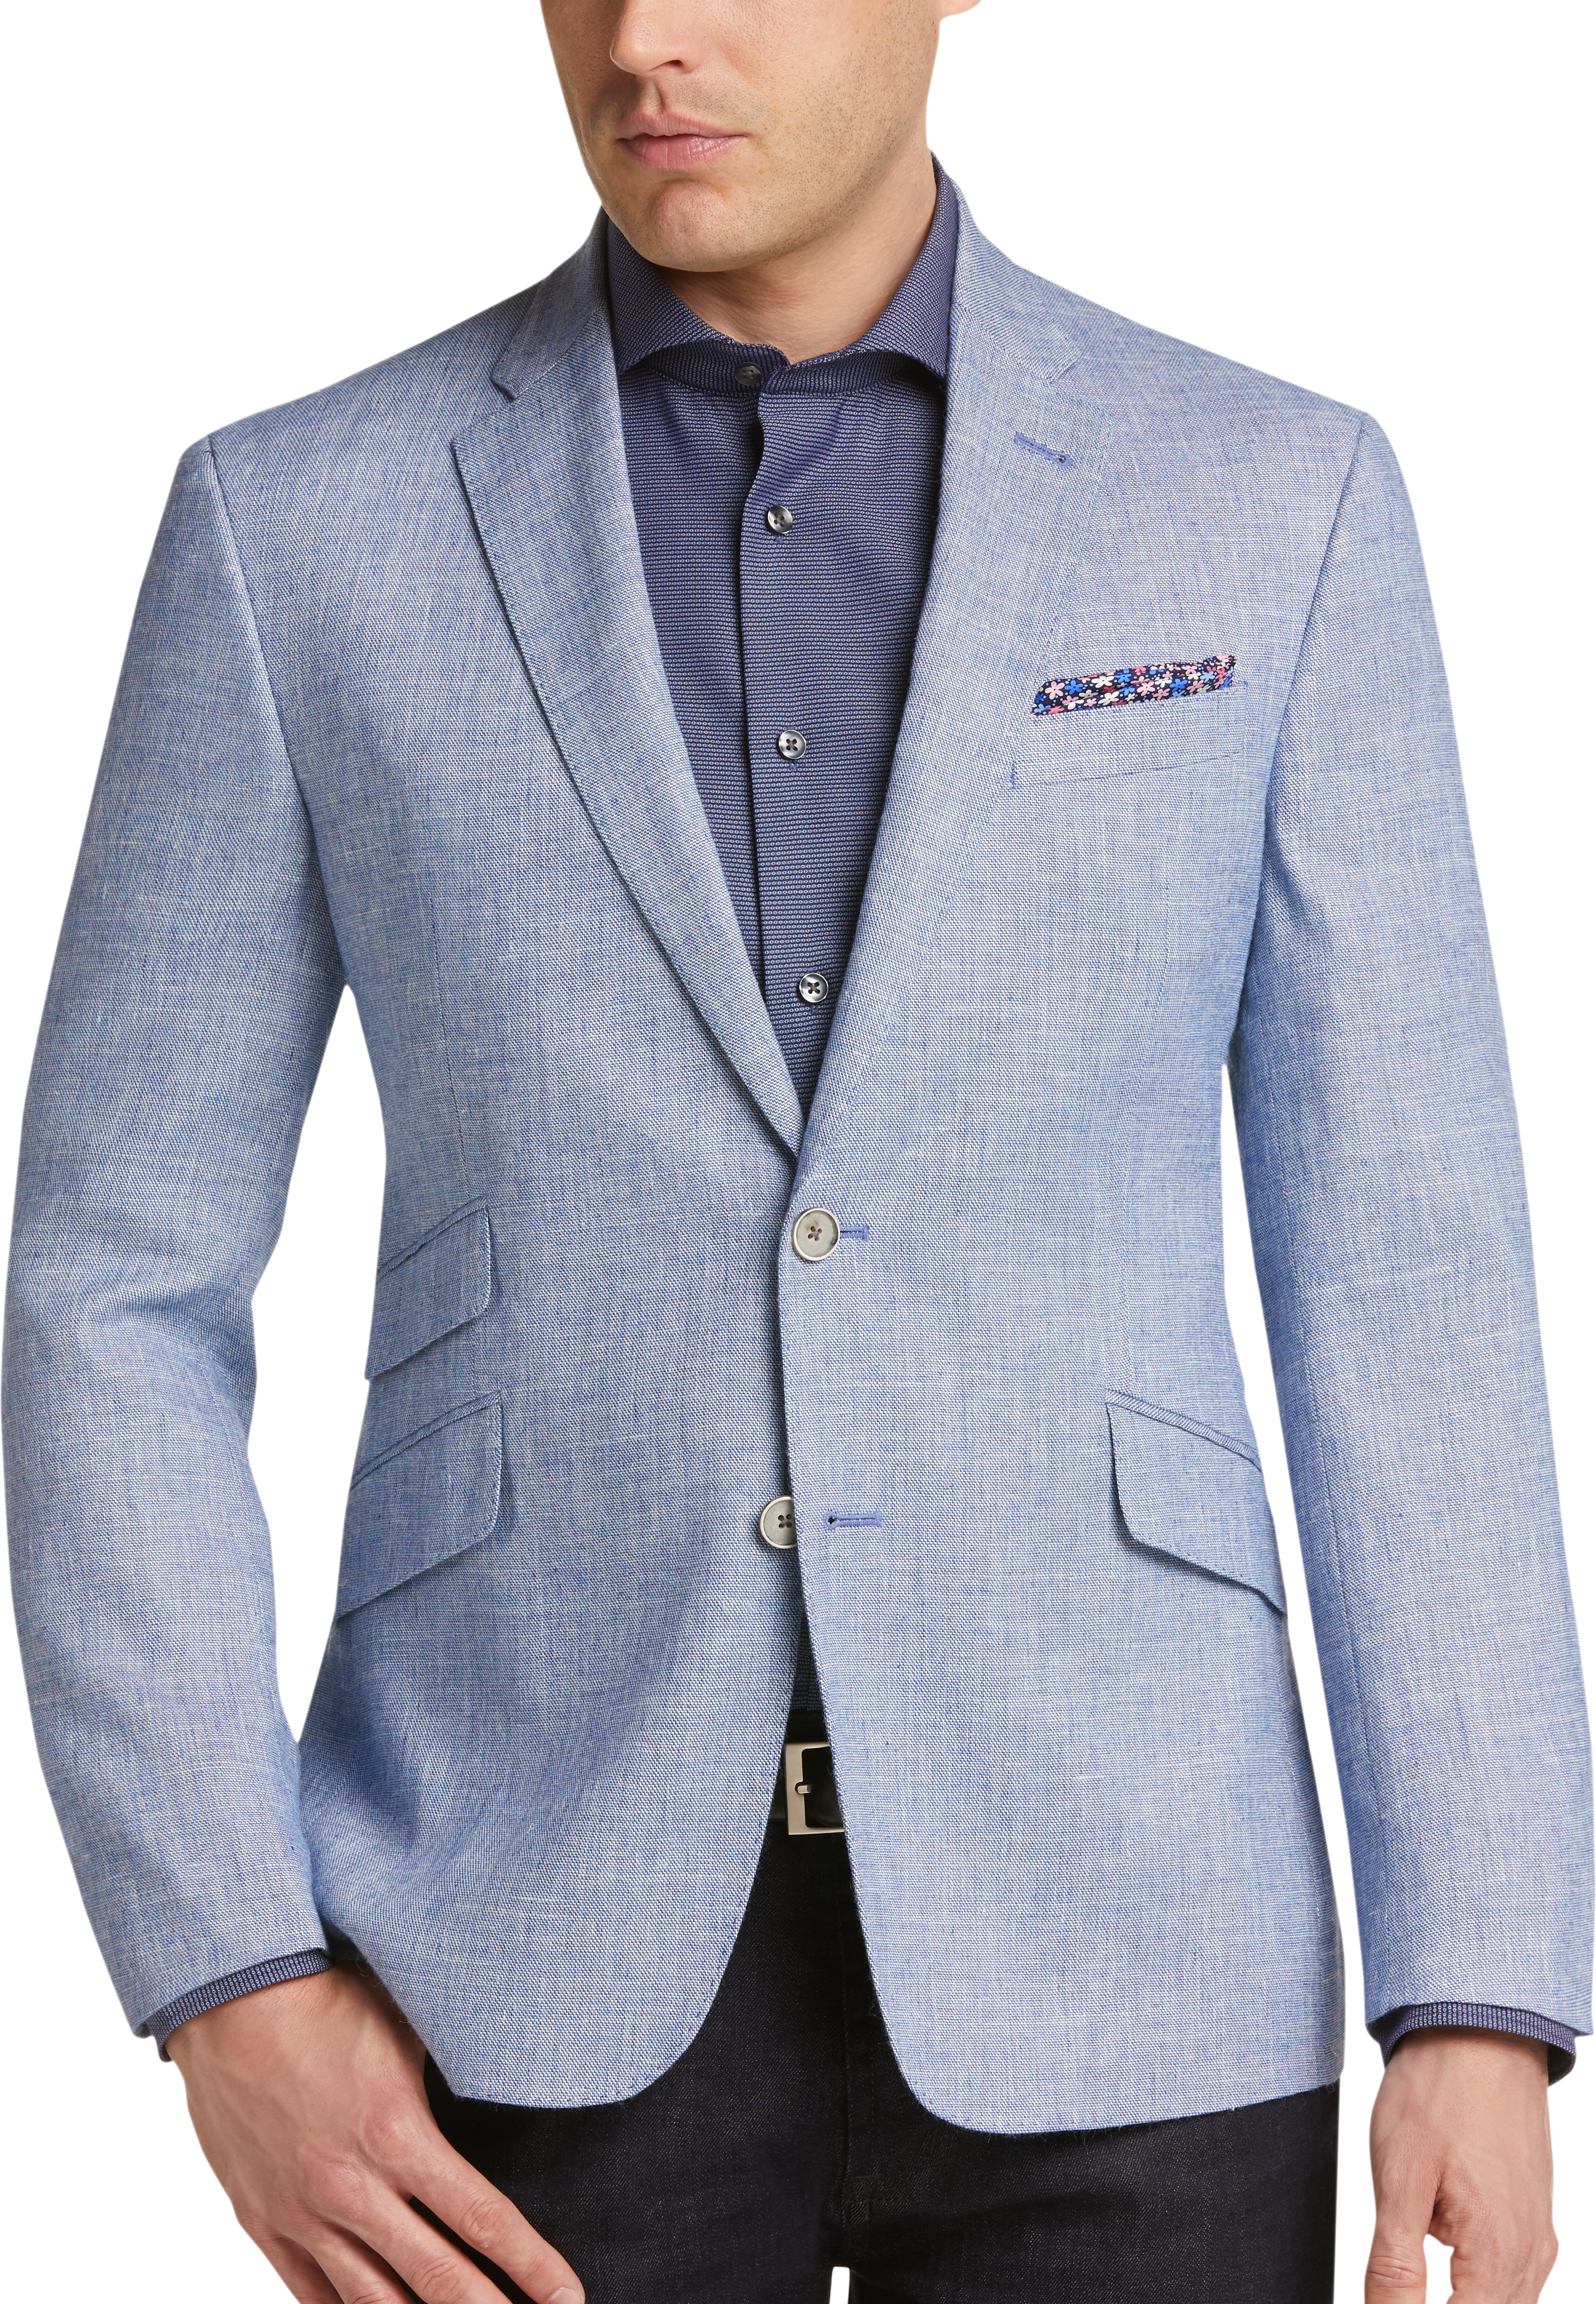 JOE Joseph Abboud Light Blue Tic Slim Fit Sport Coat - Men's Sale | Men ...